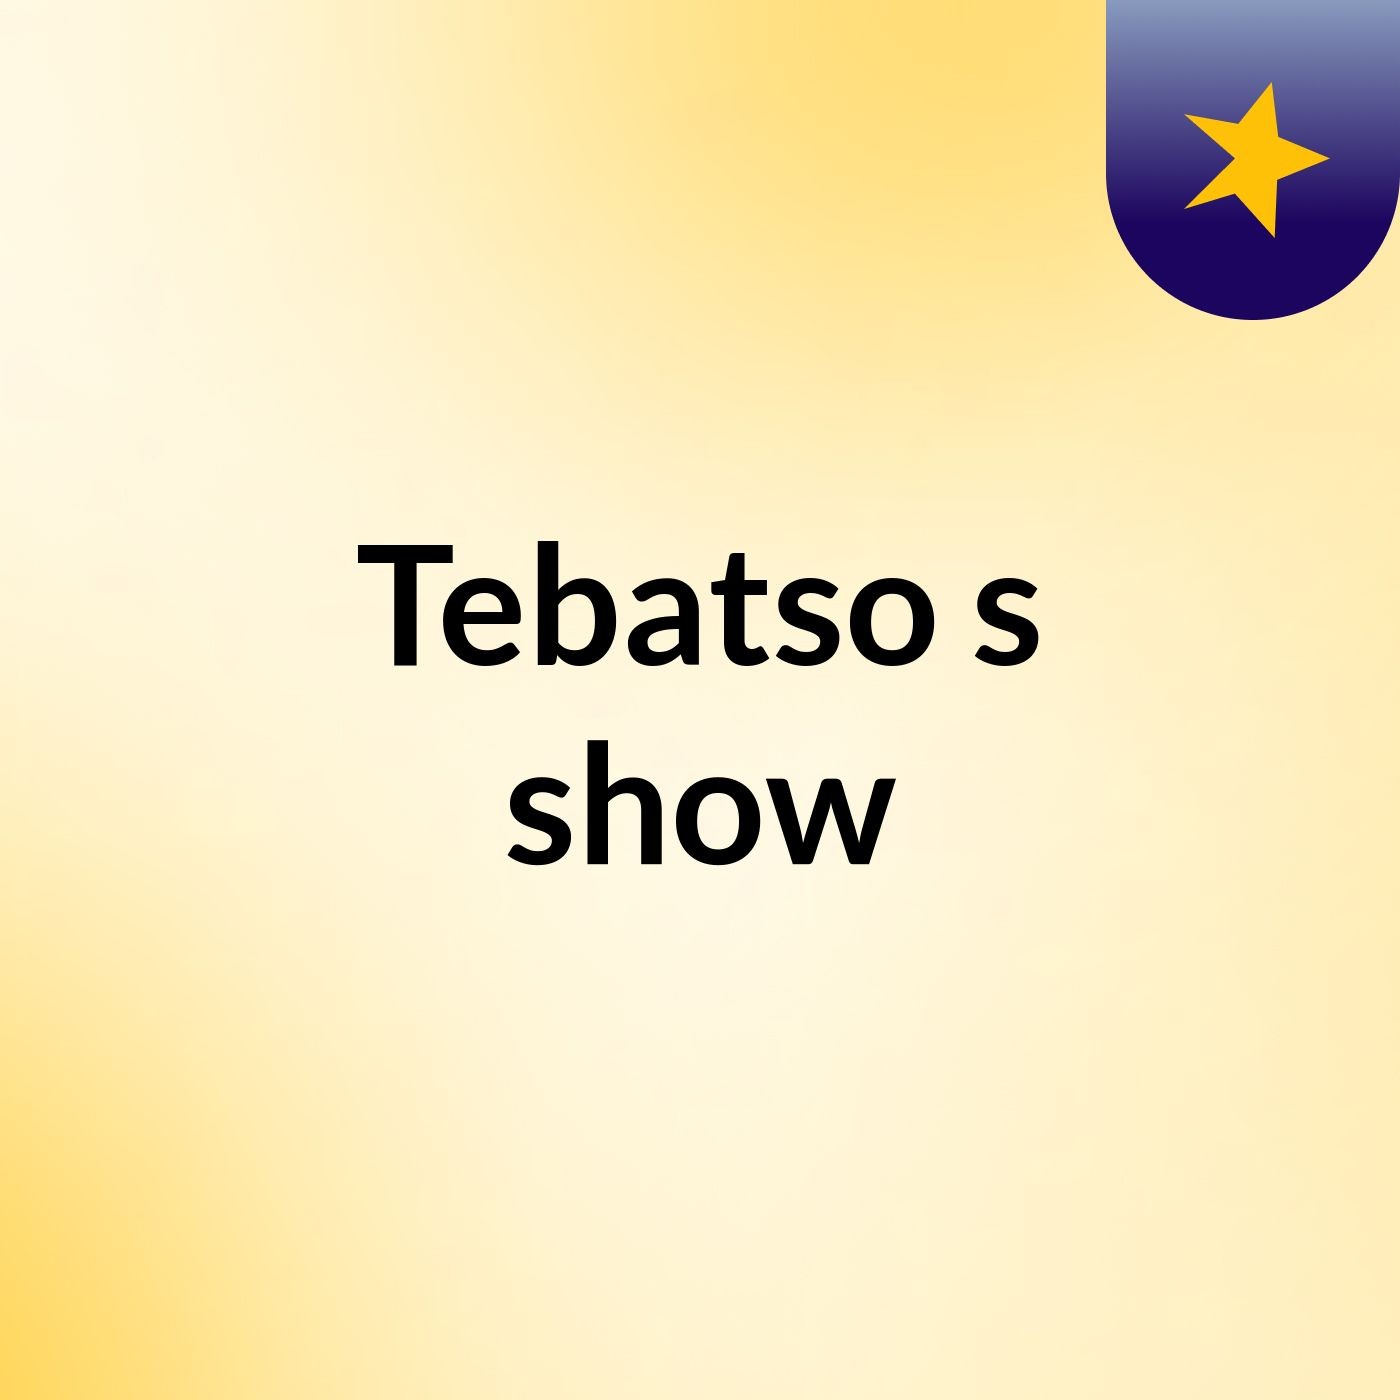 Tebatso's show